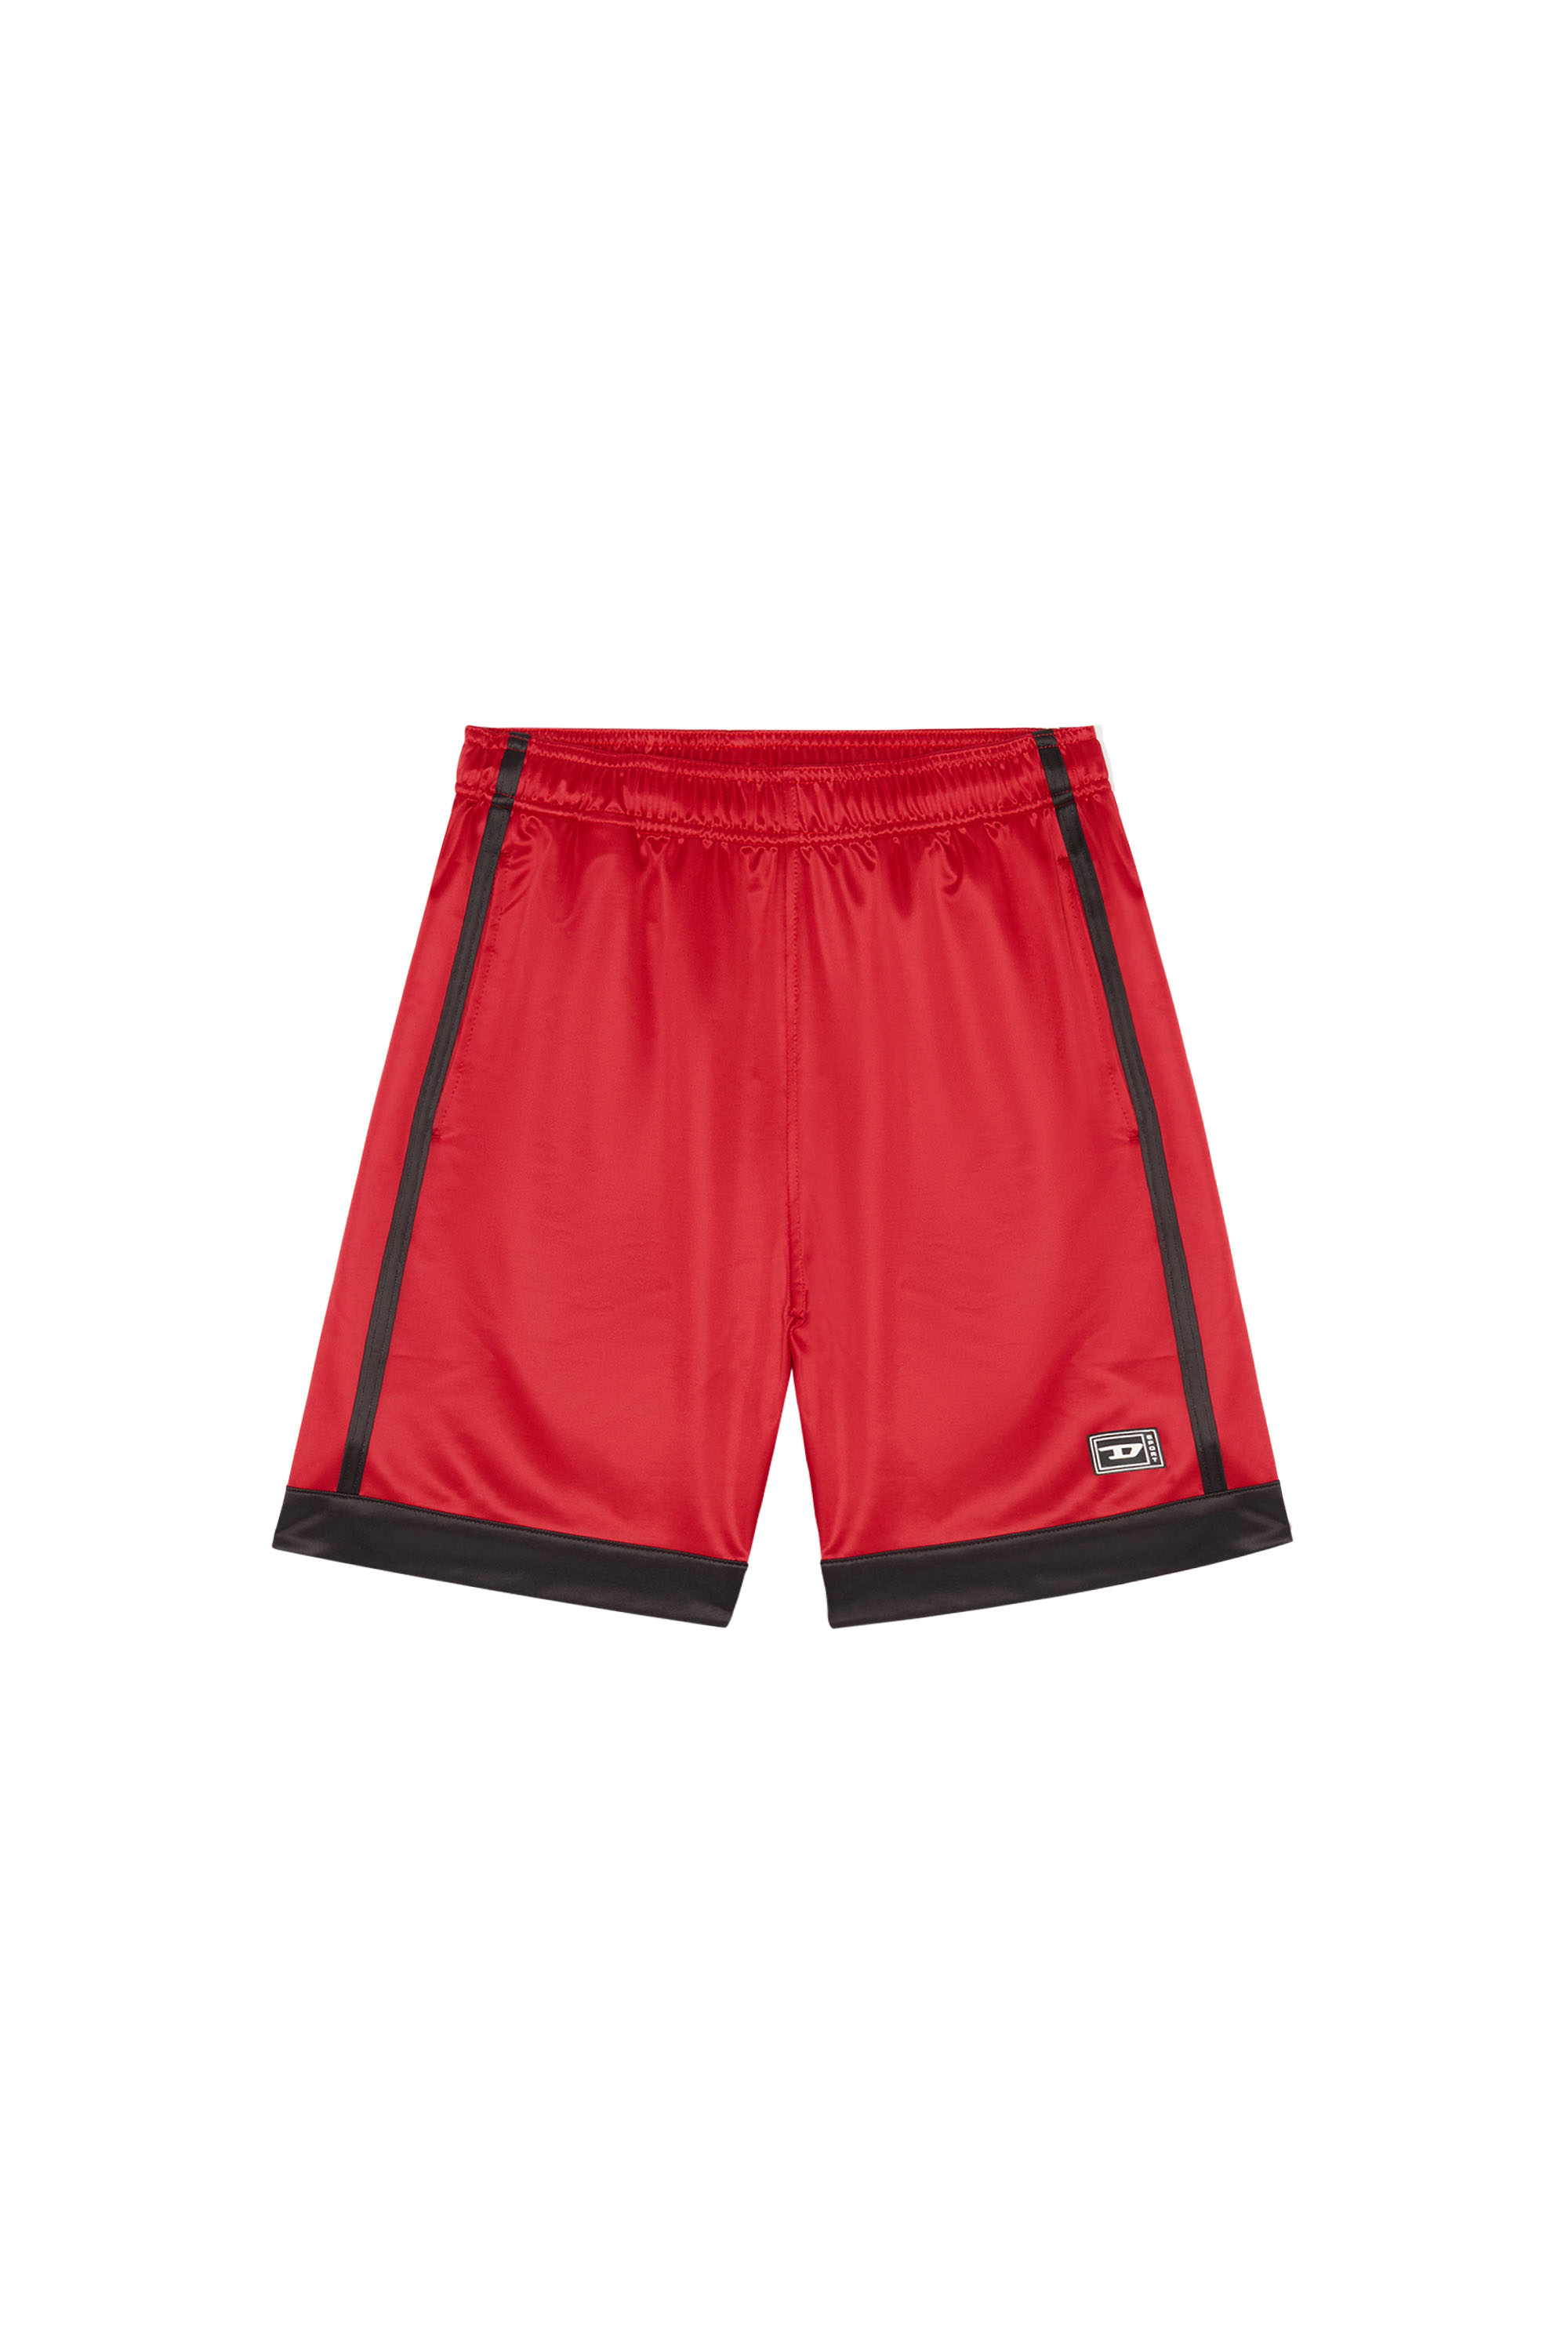 AMSB-STADIOM-WT13, Red - Shorts